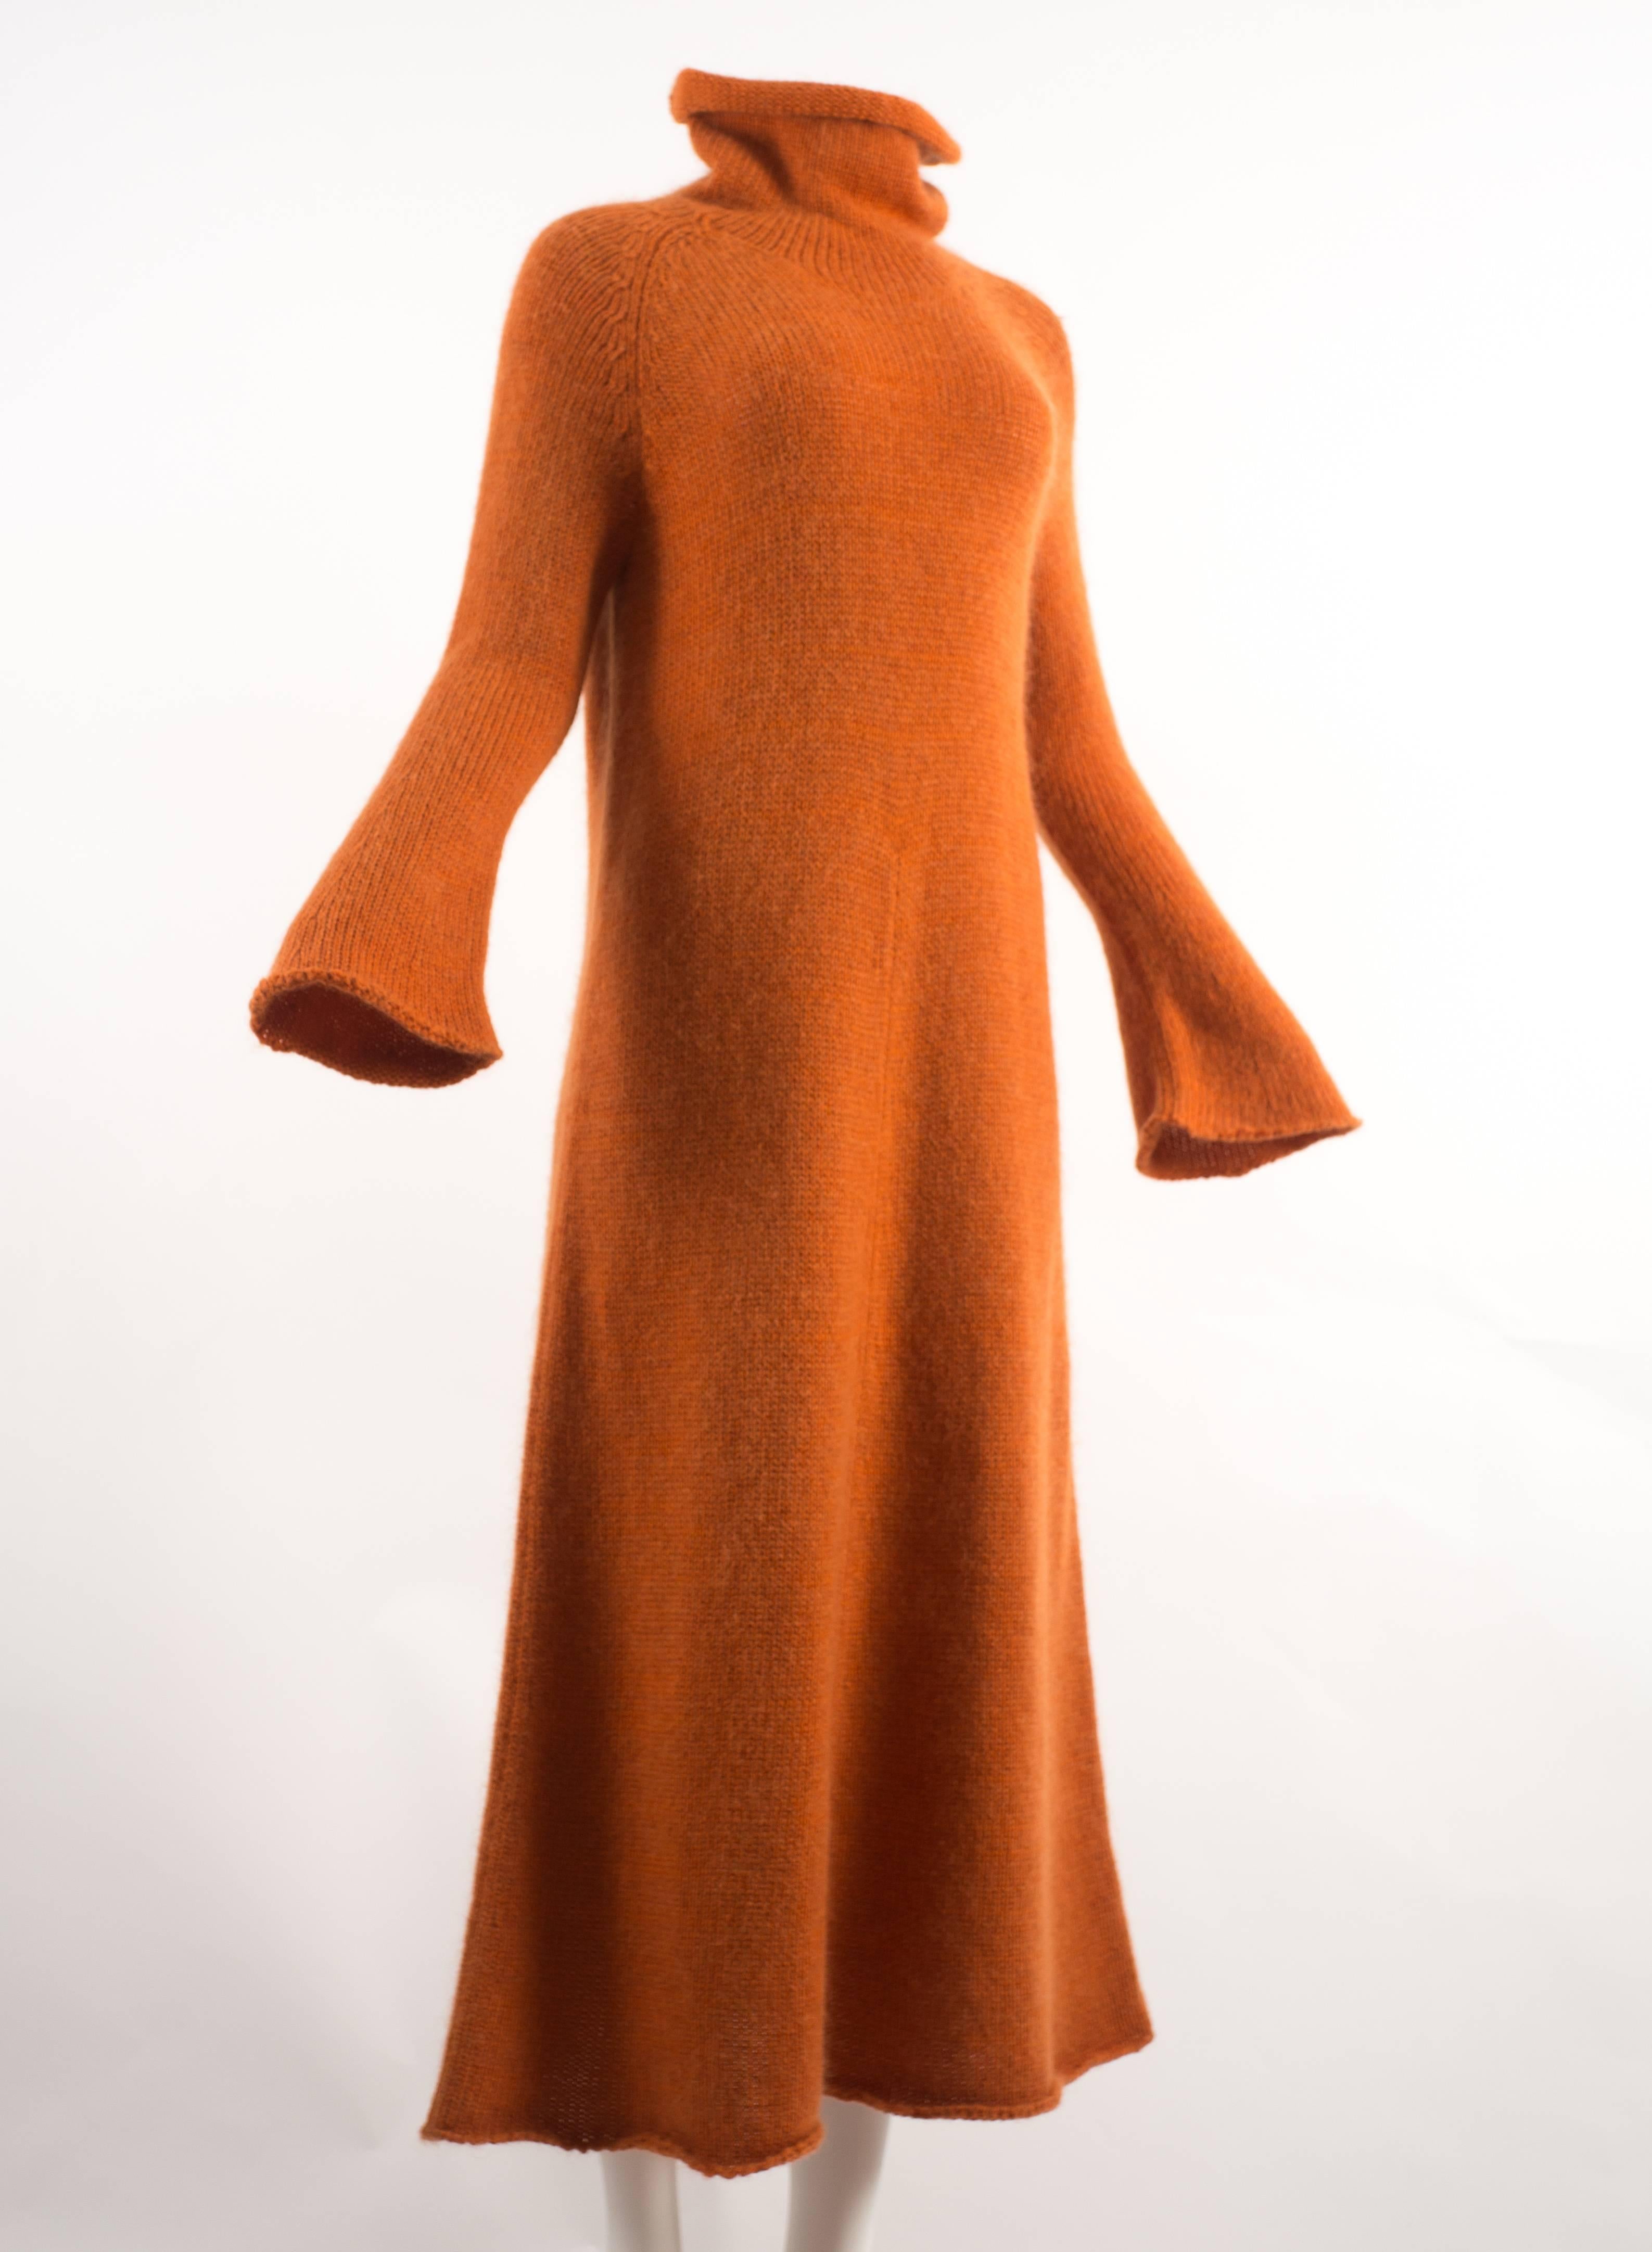 Women's Yohji Yamamoto Autumn-Winter 1998 orange knitted maxi dress